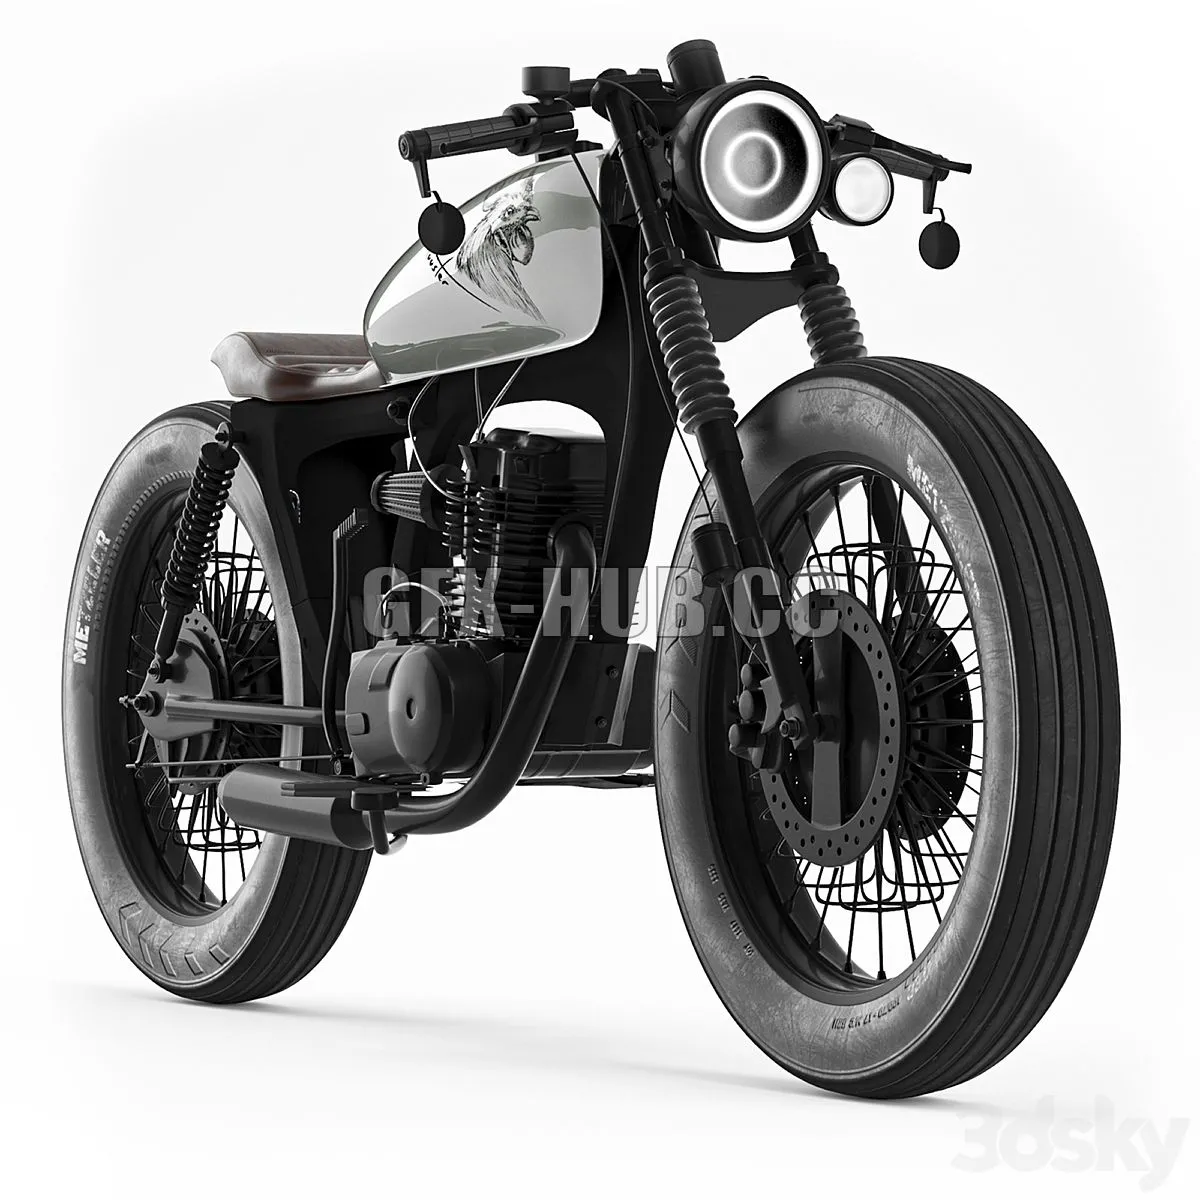 PBR Game 3D Model – Honda CG125 Motorcycle